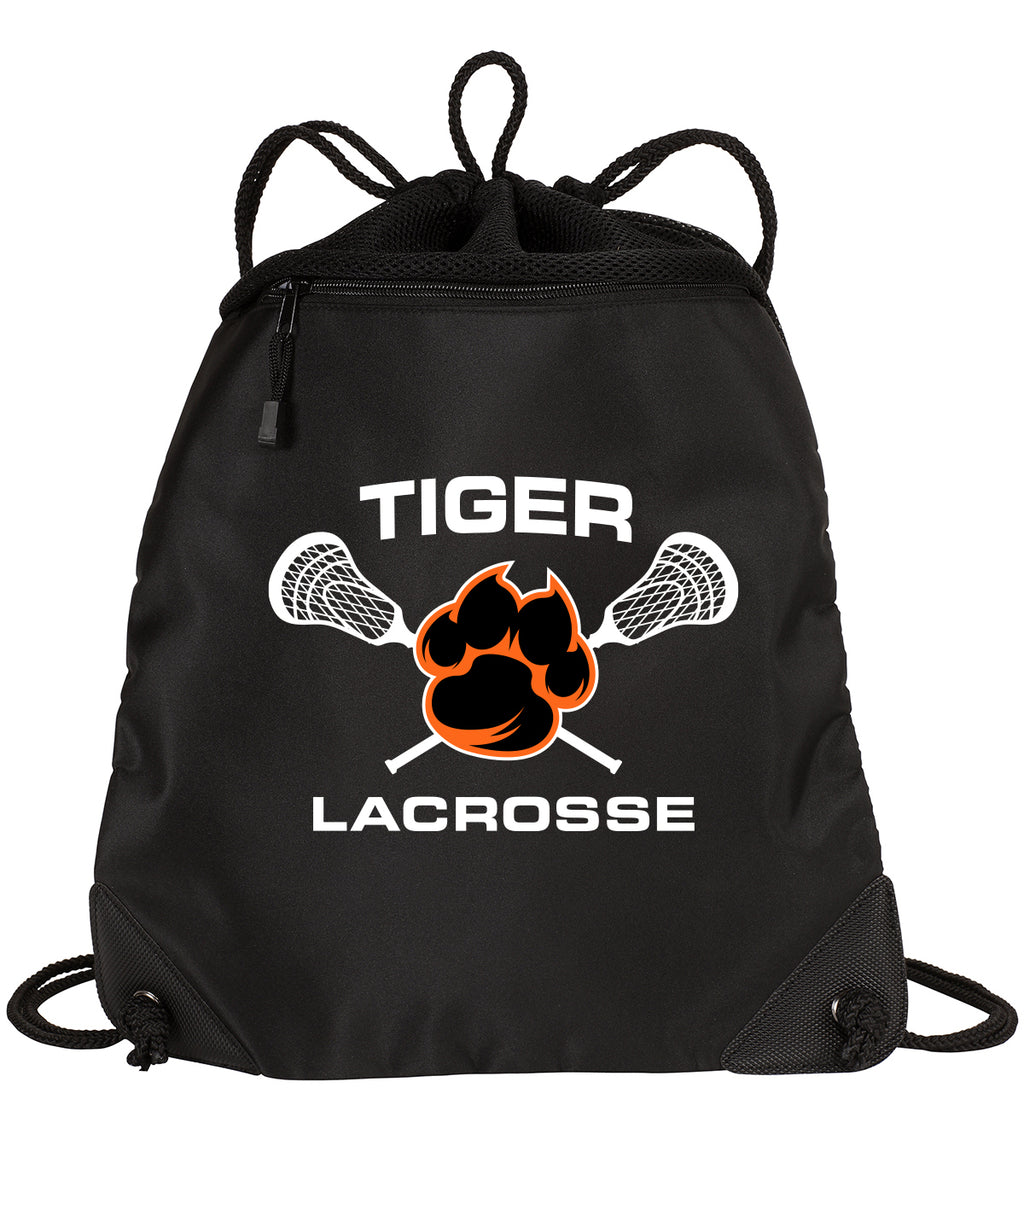 Tiger Lacrosse Cinch Bag